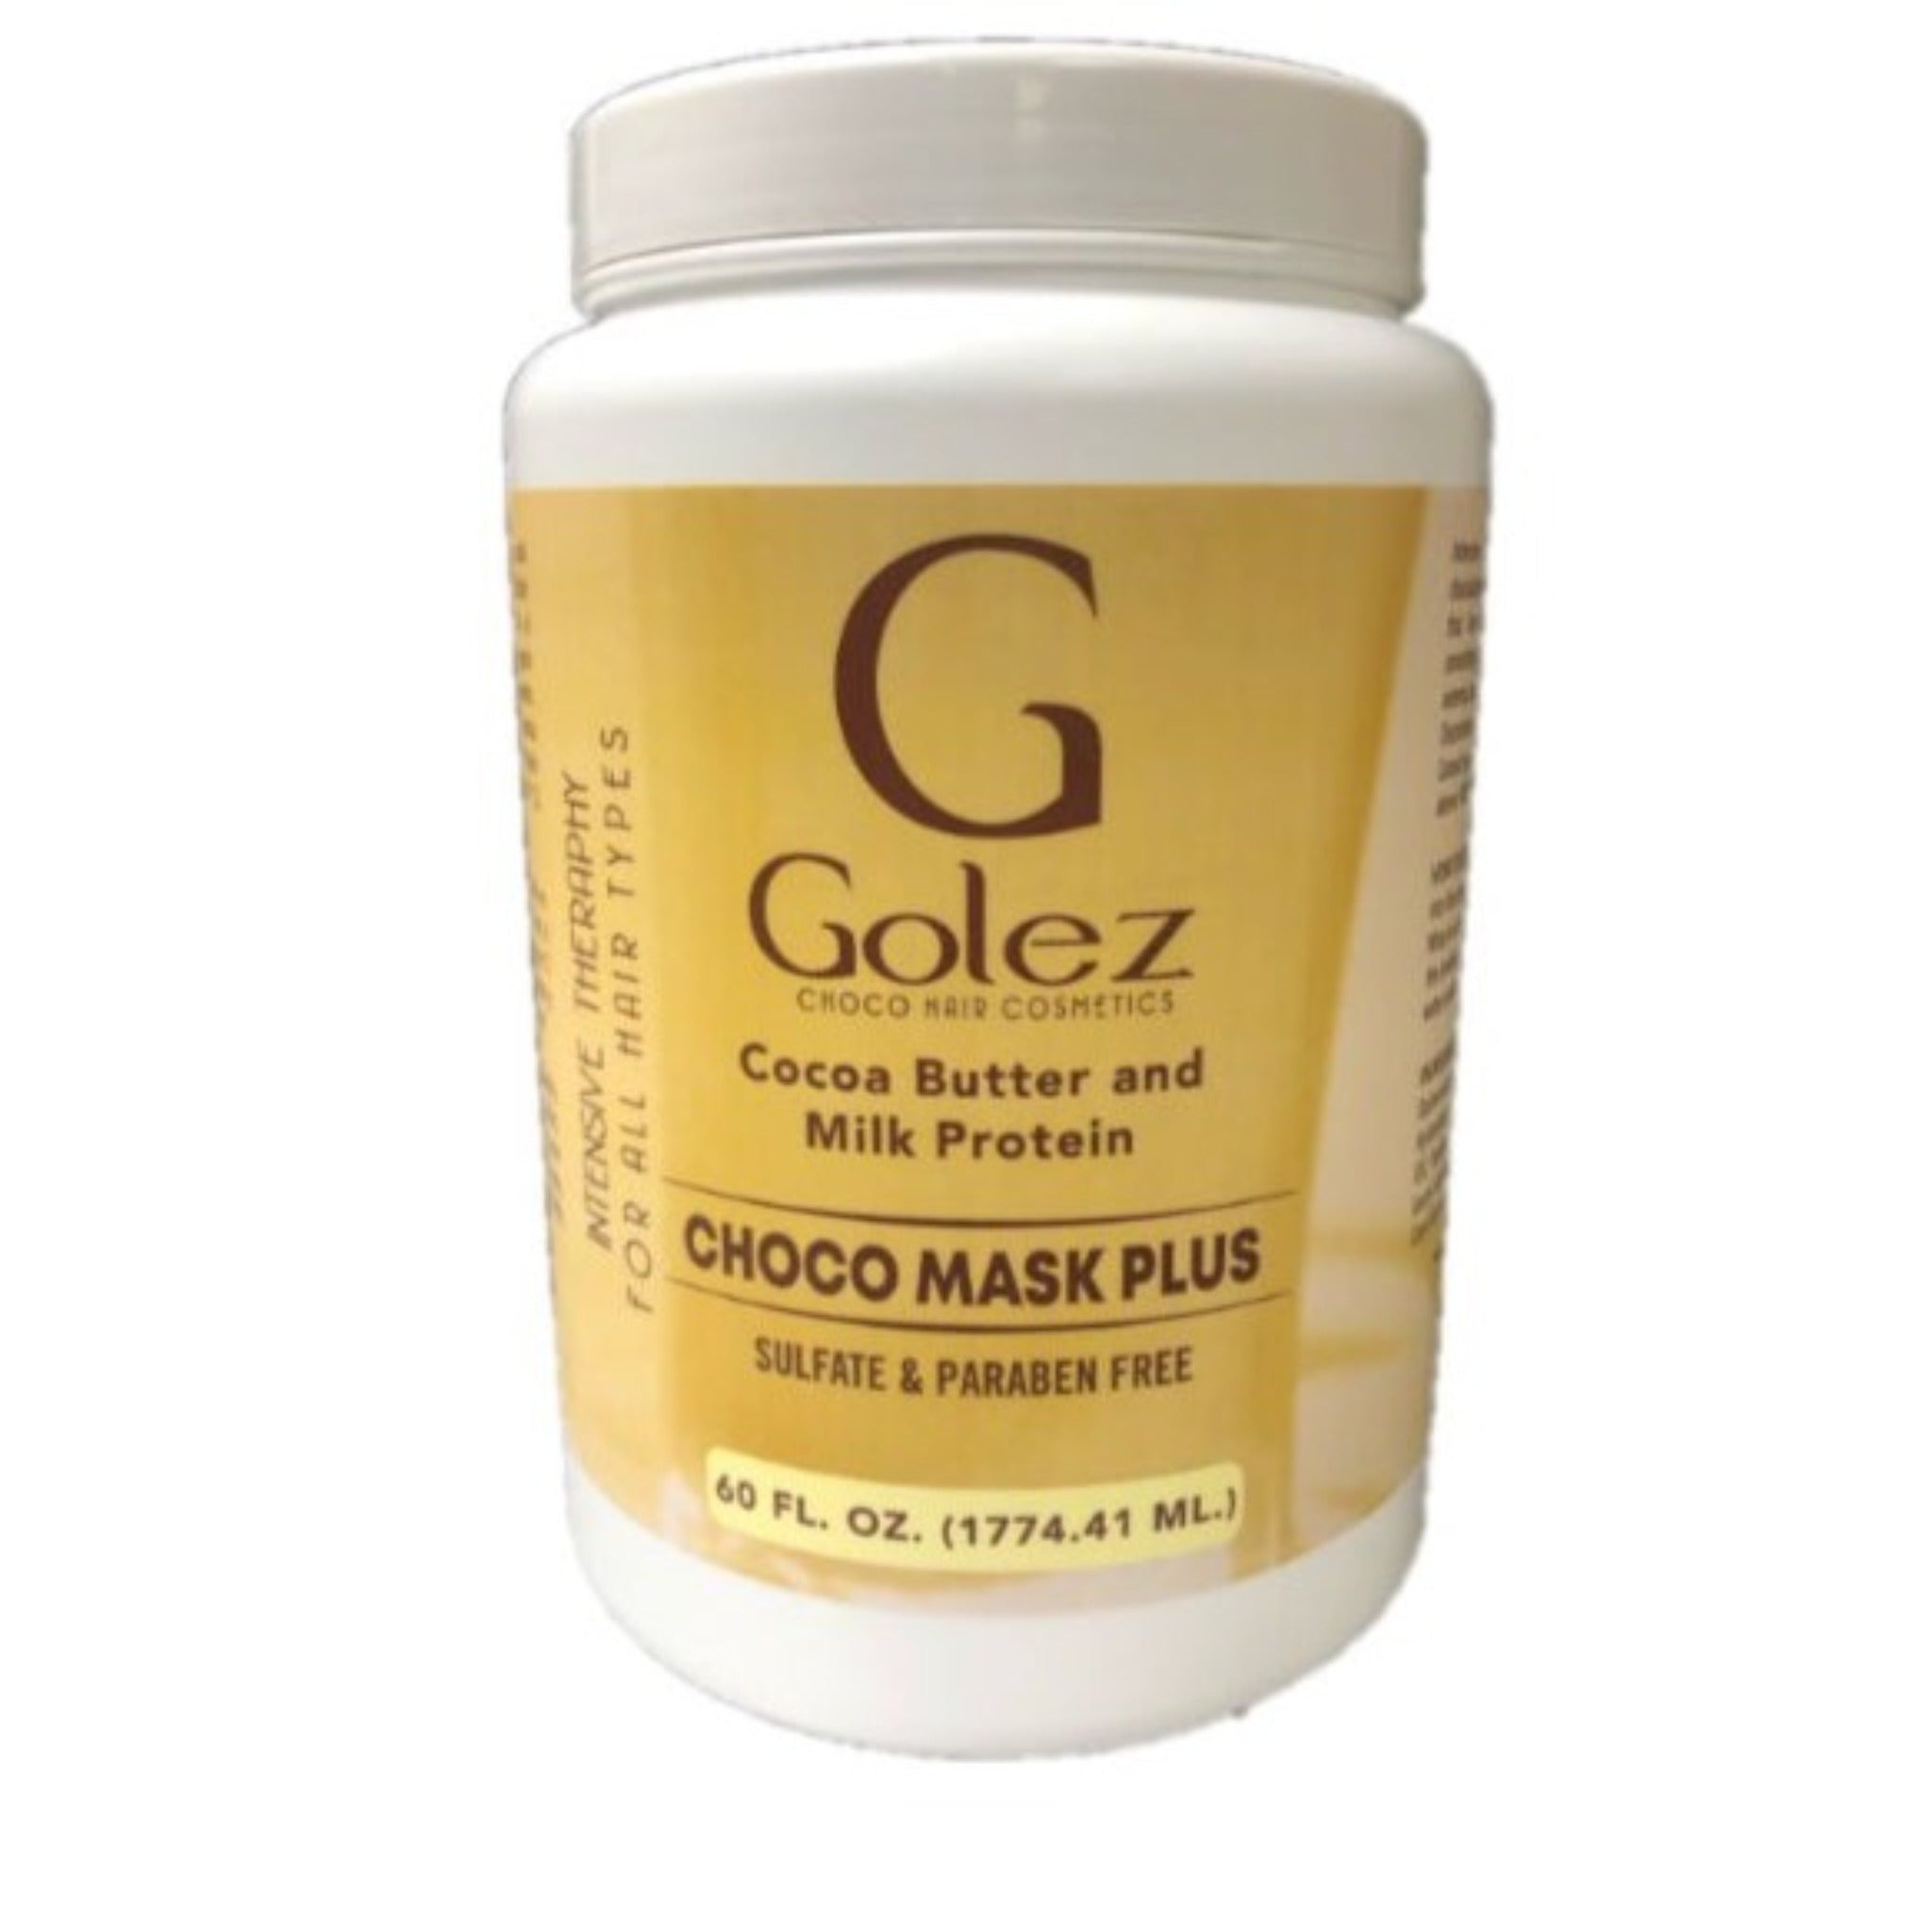 Golez Choco Mask Plus Cocoa Butter and Milk Protein Conditioner (Treatment) 60 oz